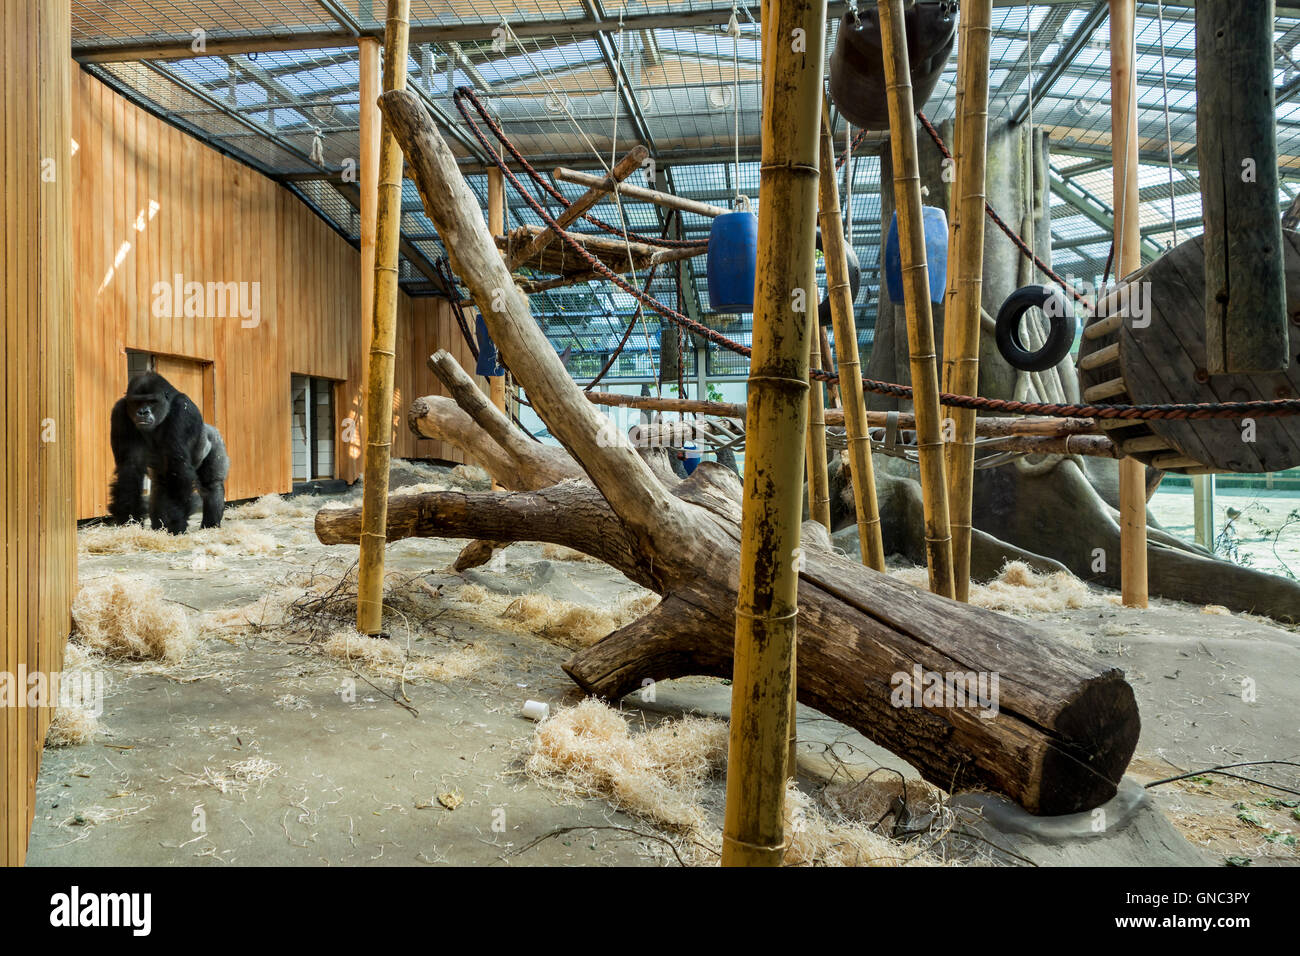 Indoor enclosure for western lowland gorillas (Gorilla gorilla gorilla) at the Antwerp Zoo, Belgium Stock Photo